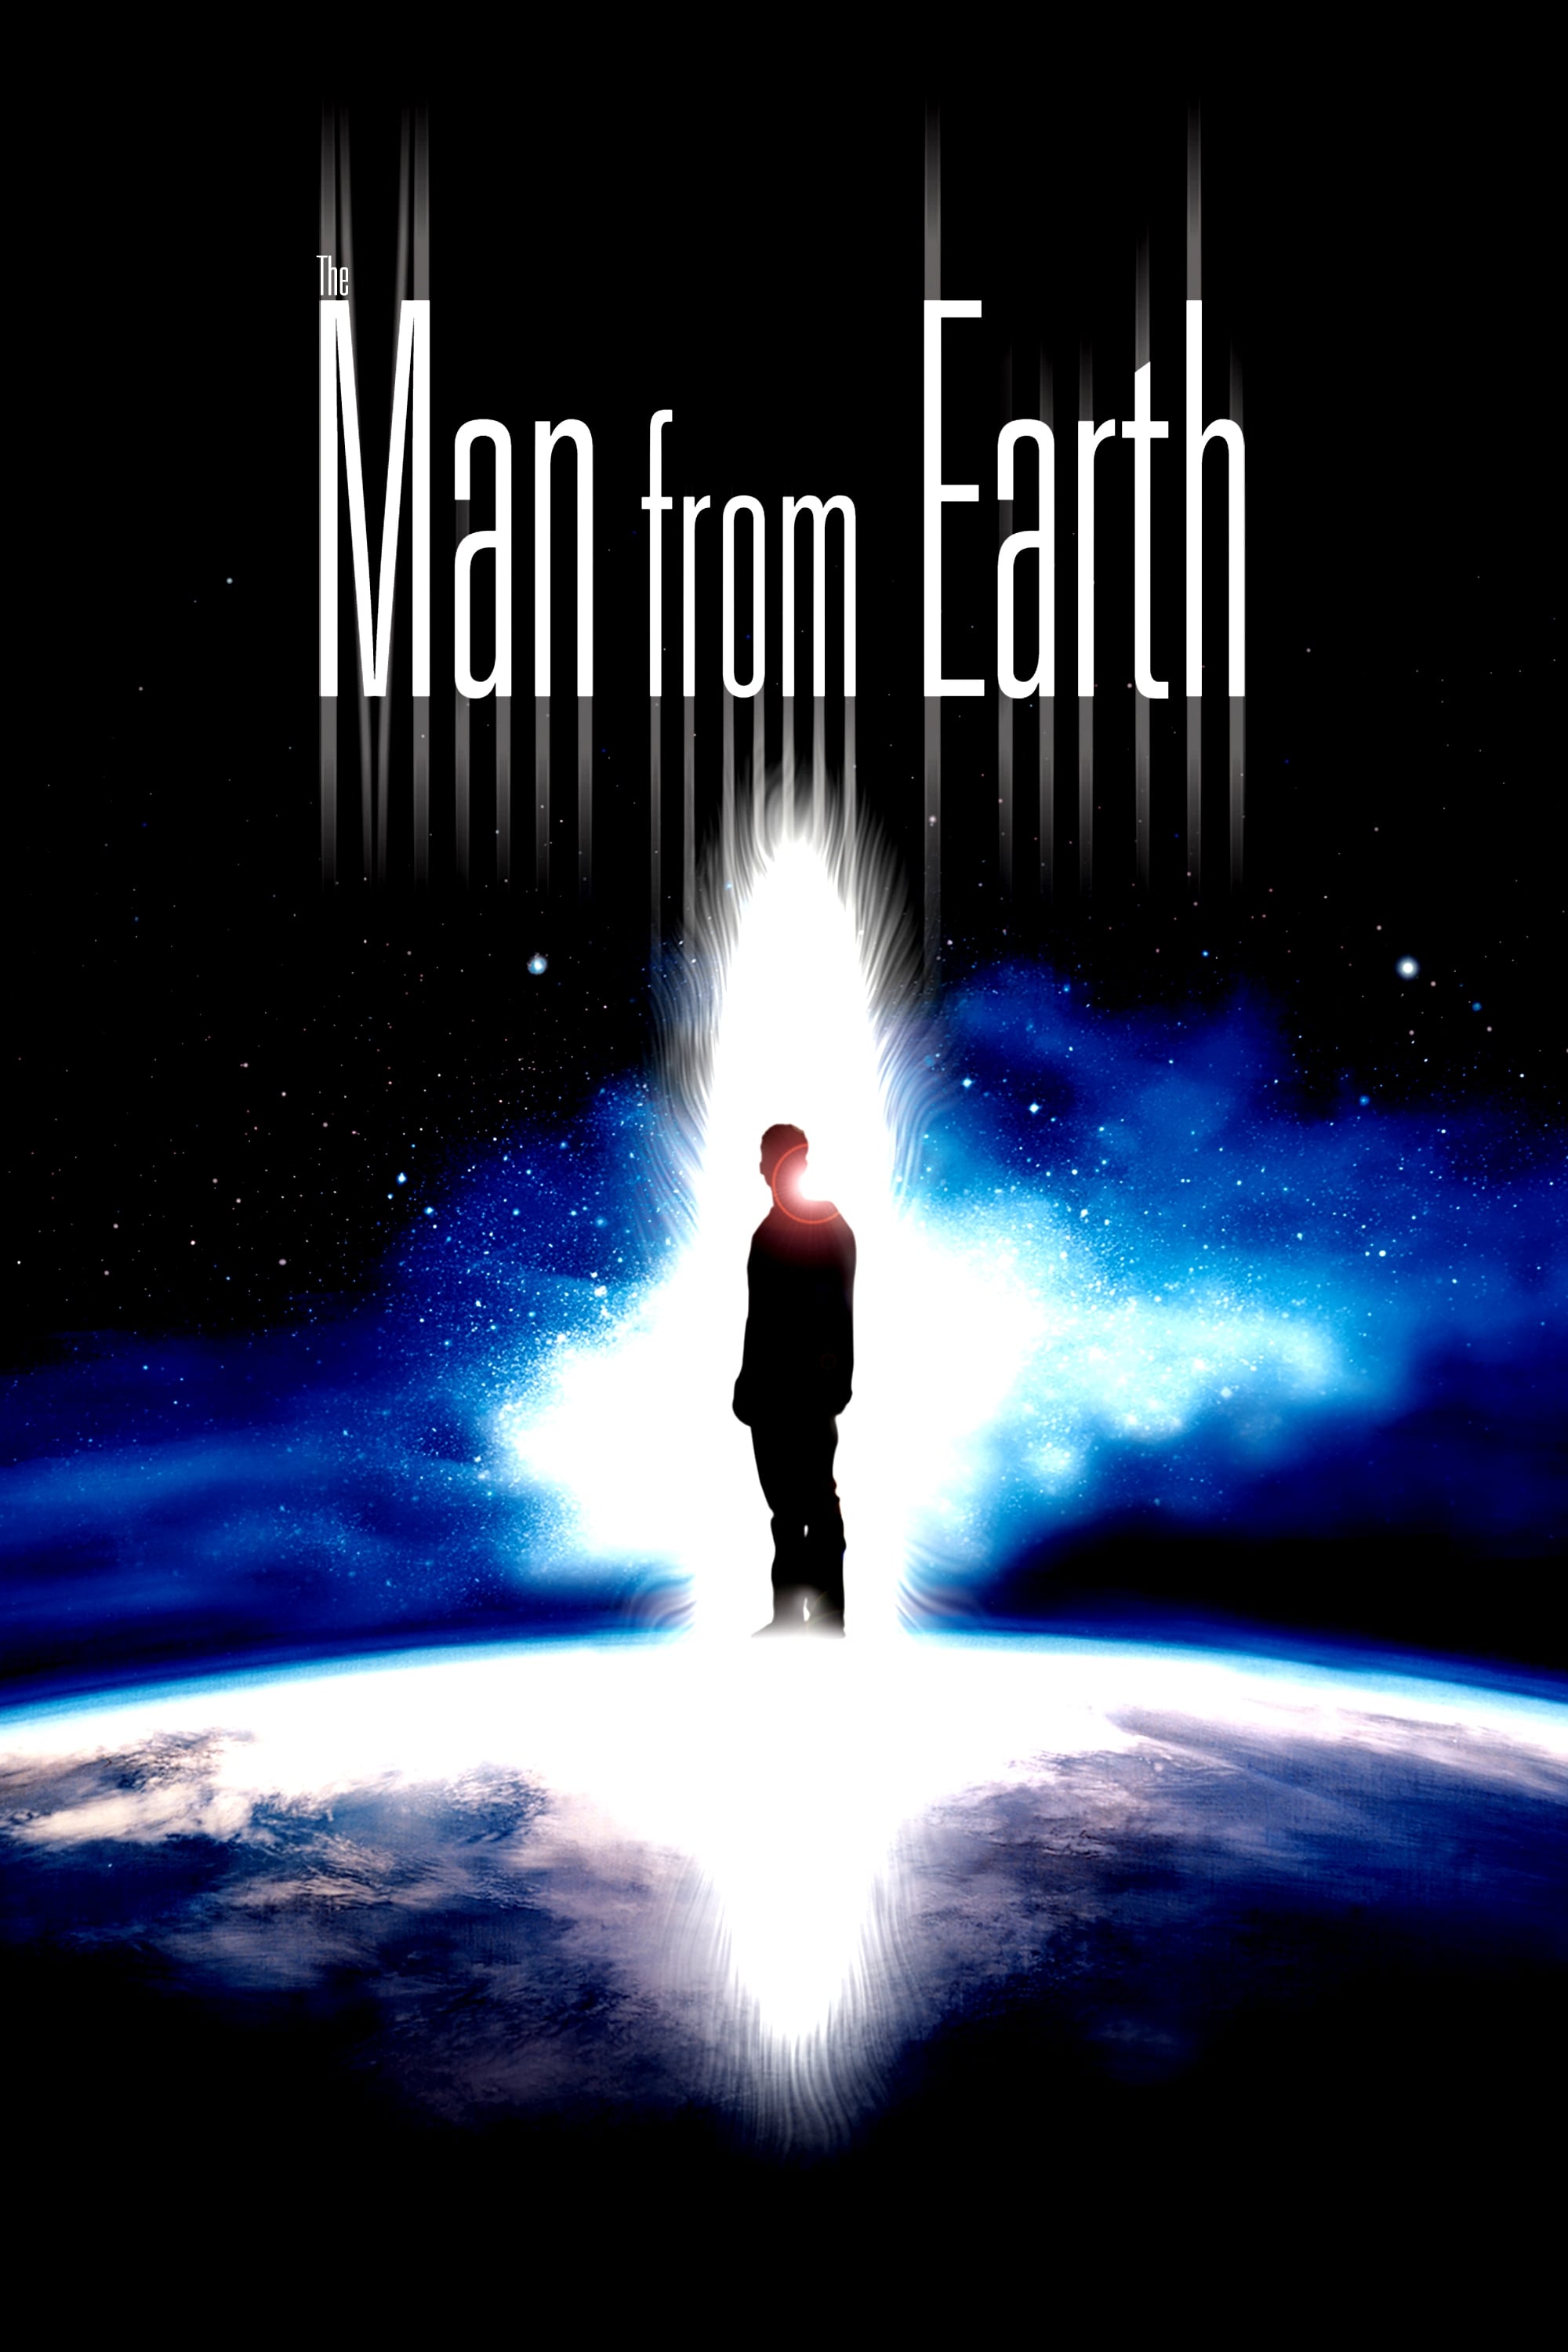 Người Bất Tử (The Man from Earth) [2007]